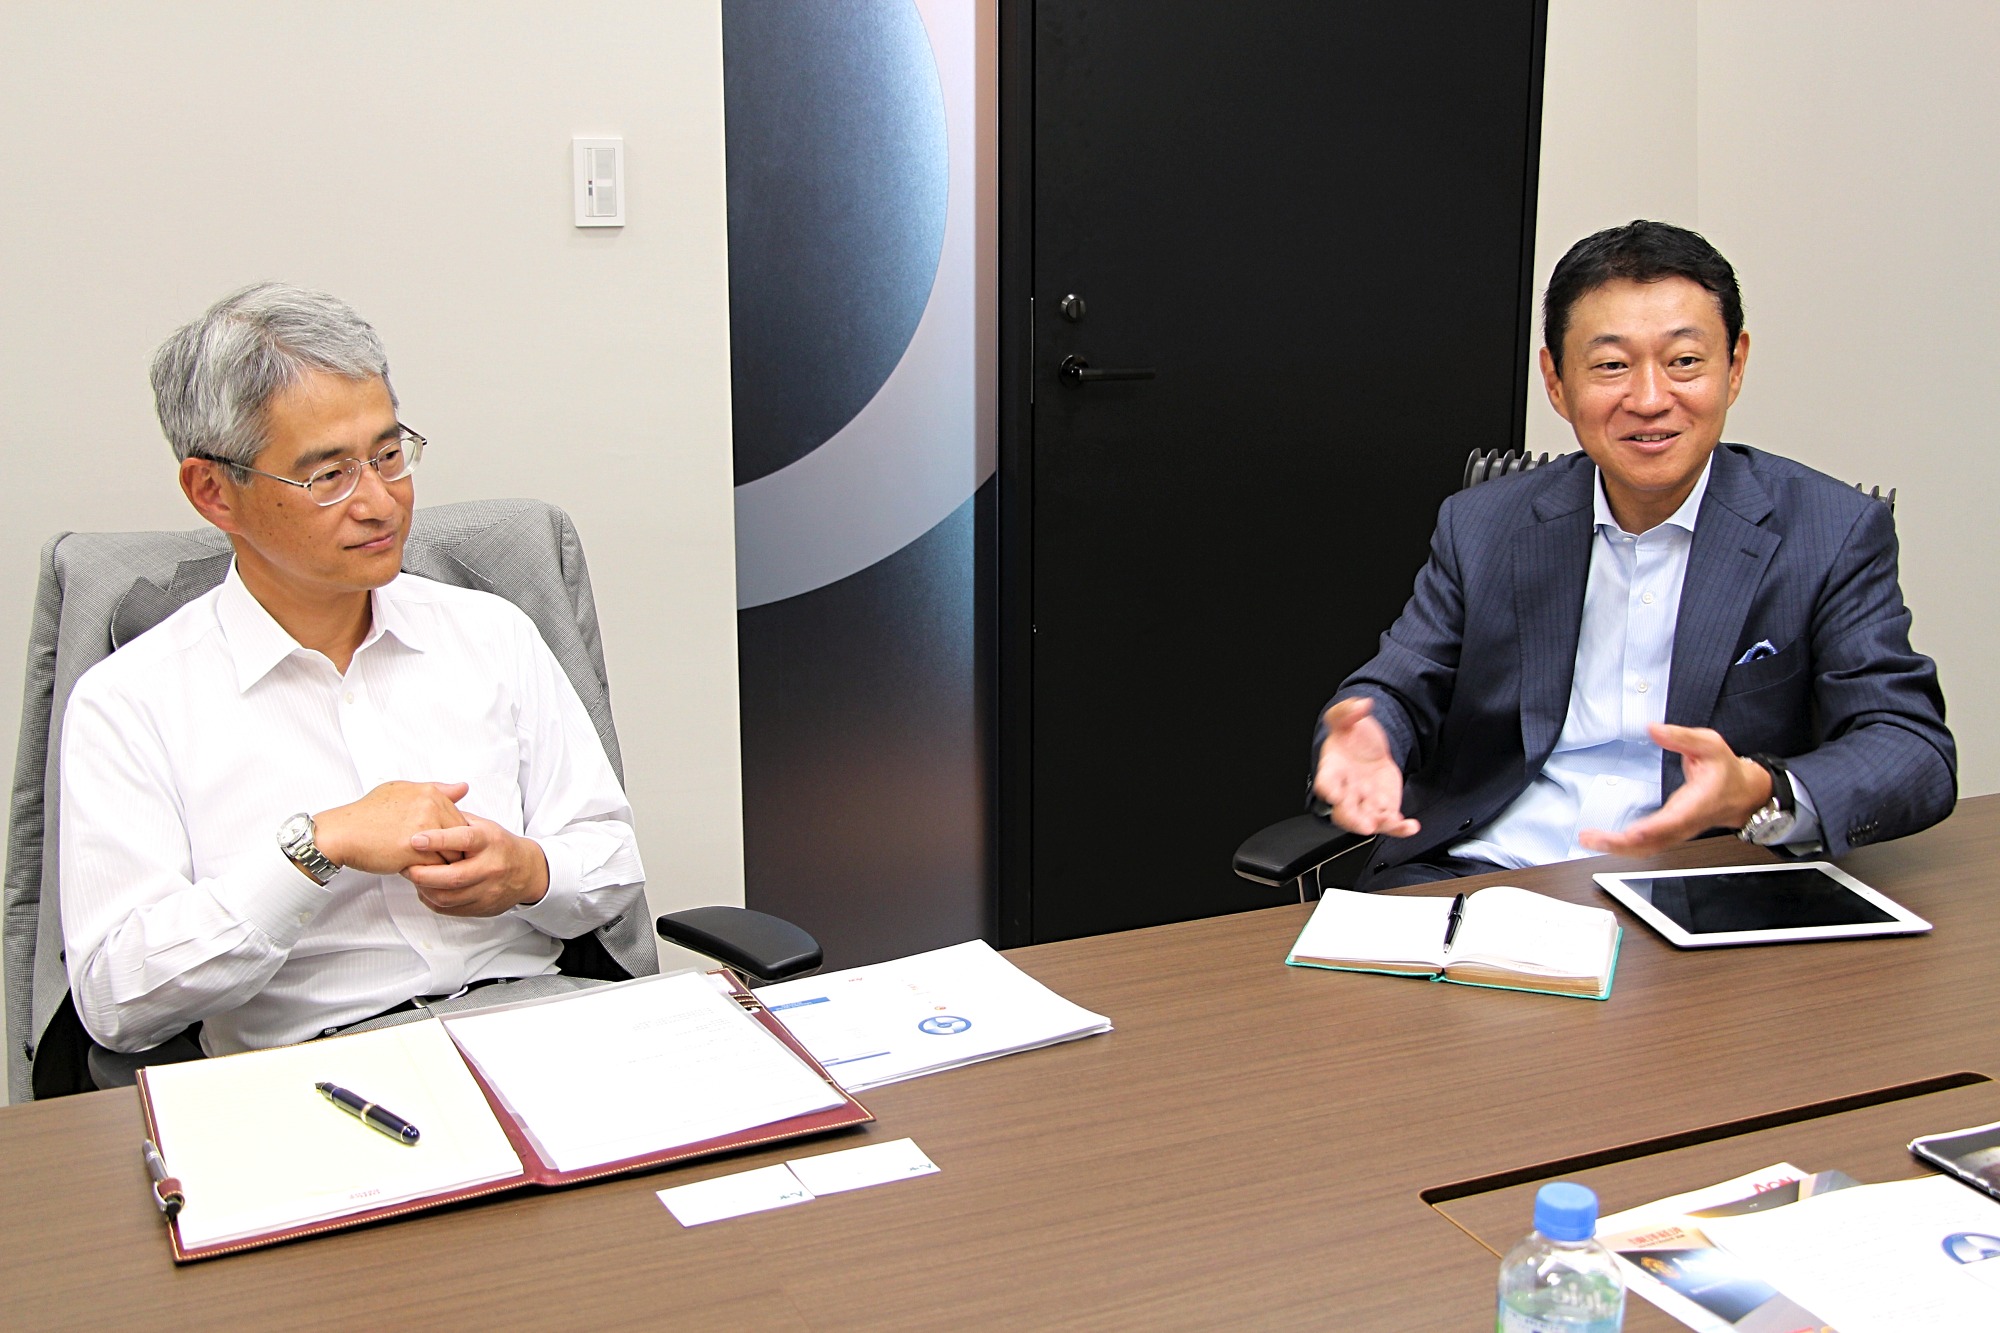 Interview: Mr. Yamamoto, President & CEO of Aon Japan Ltd.